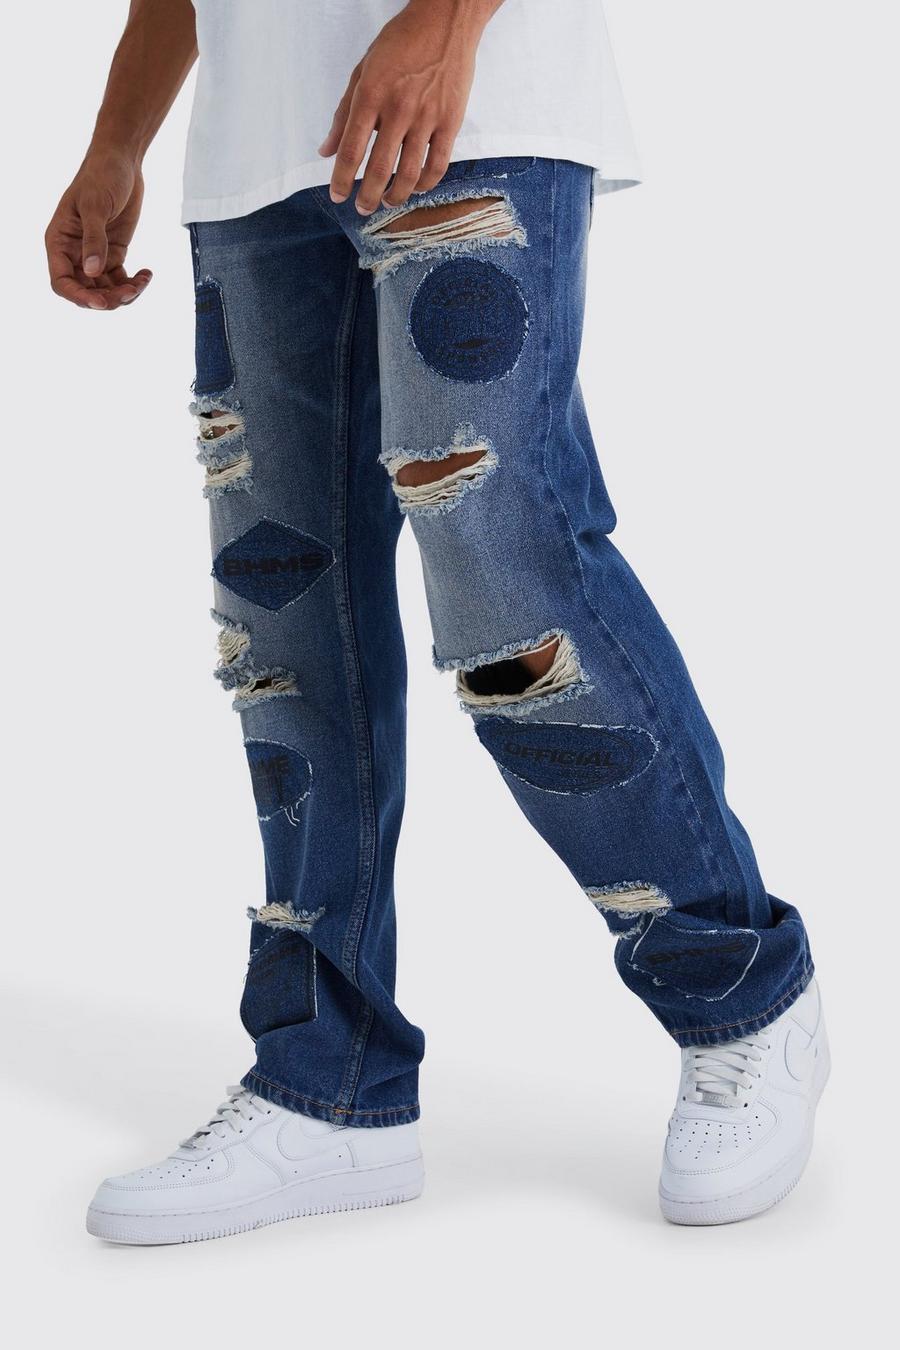 Lockere zerrissene Jeans mit Applikation, Antique blue